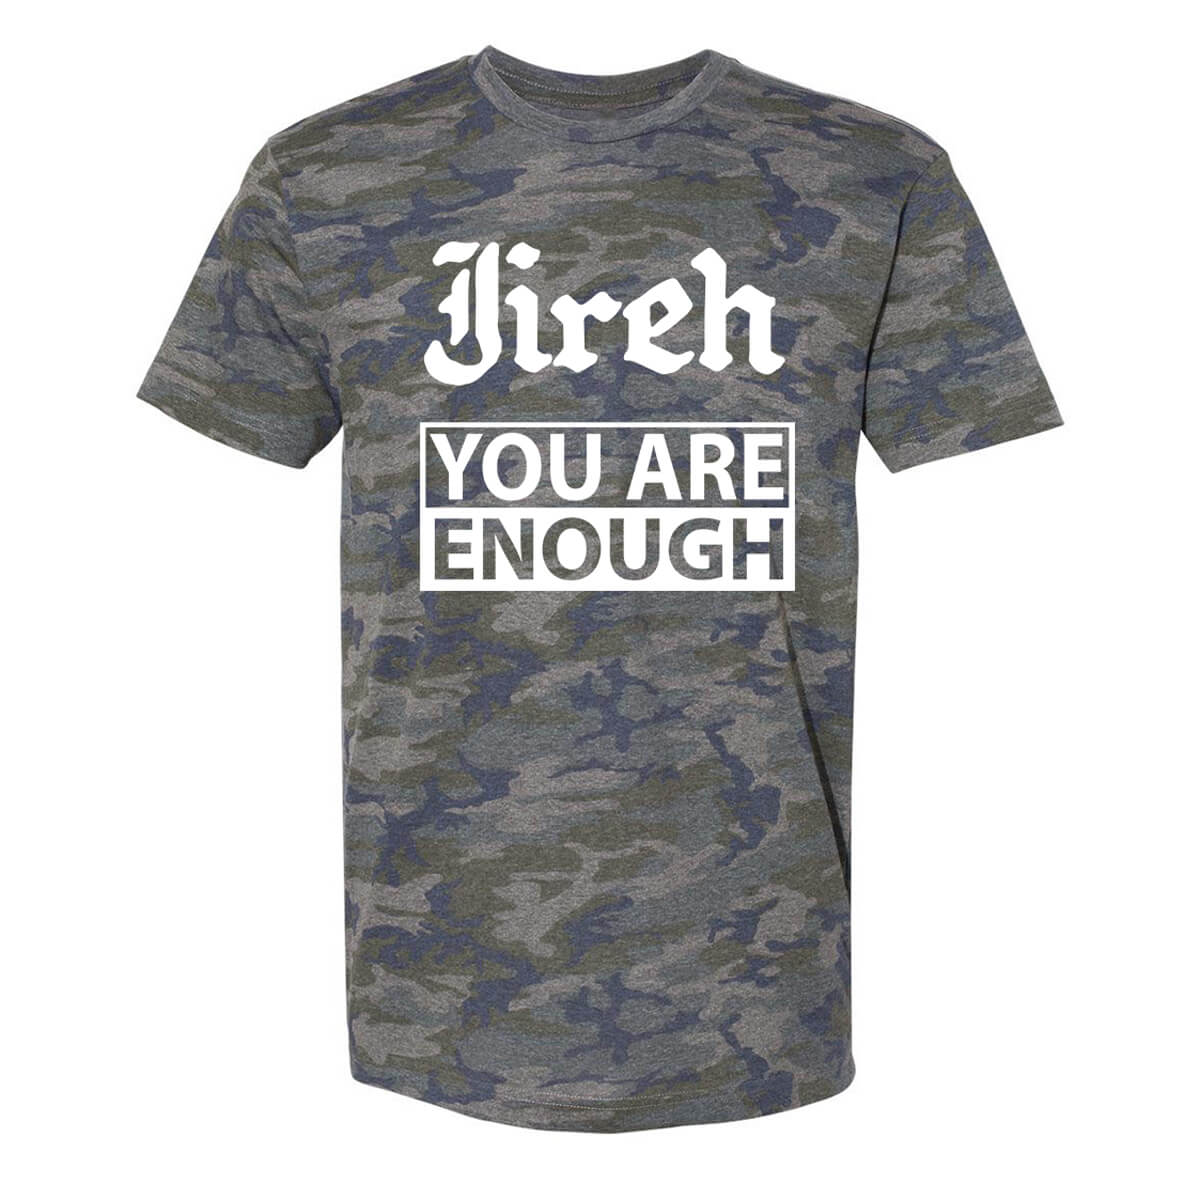 Jireh You Are Enough Men's Camo T-Shirt